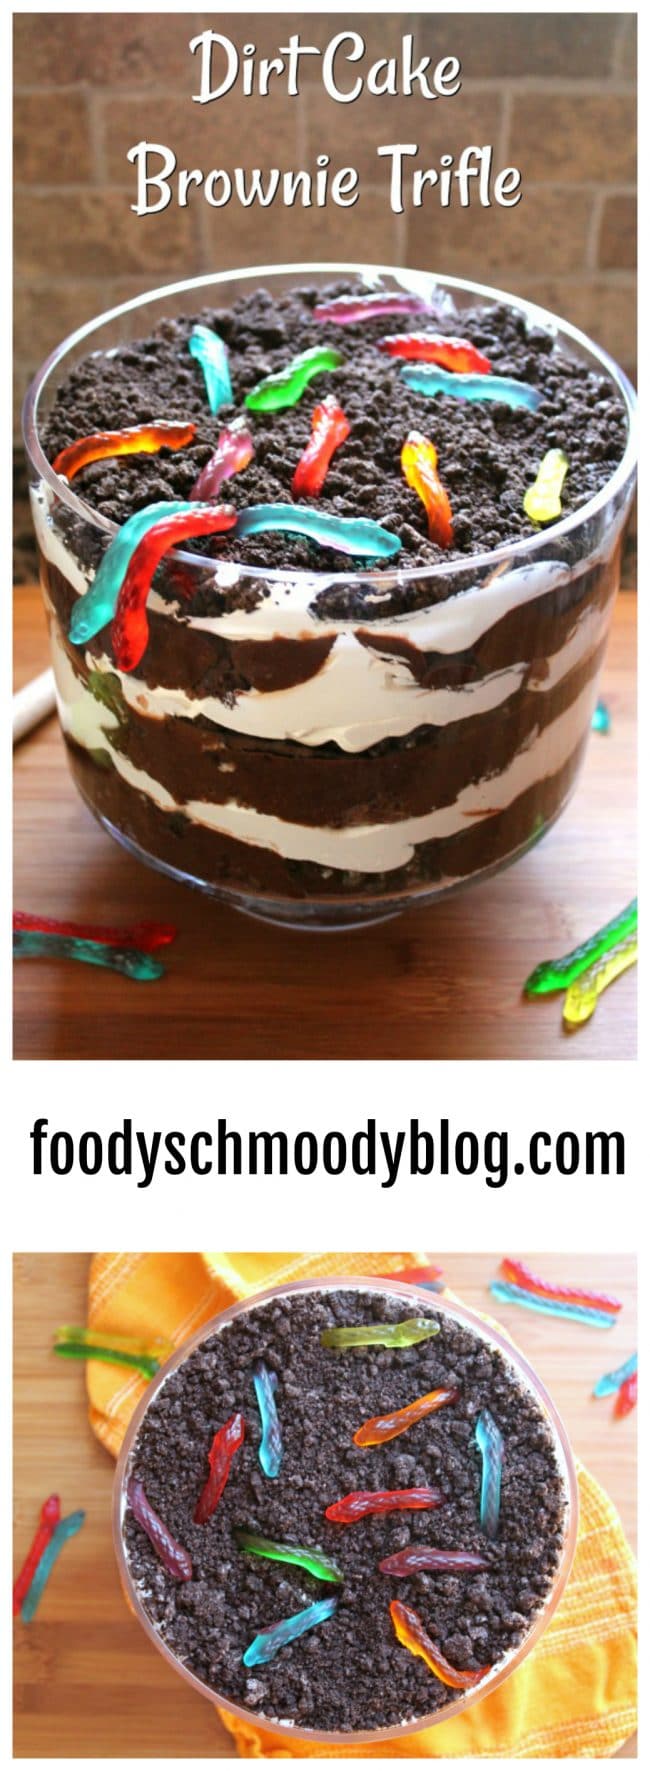 Dirt Cake Brownie Trifle foodyschmoodyblog.com